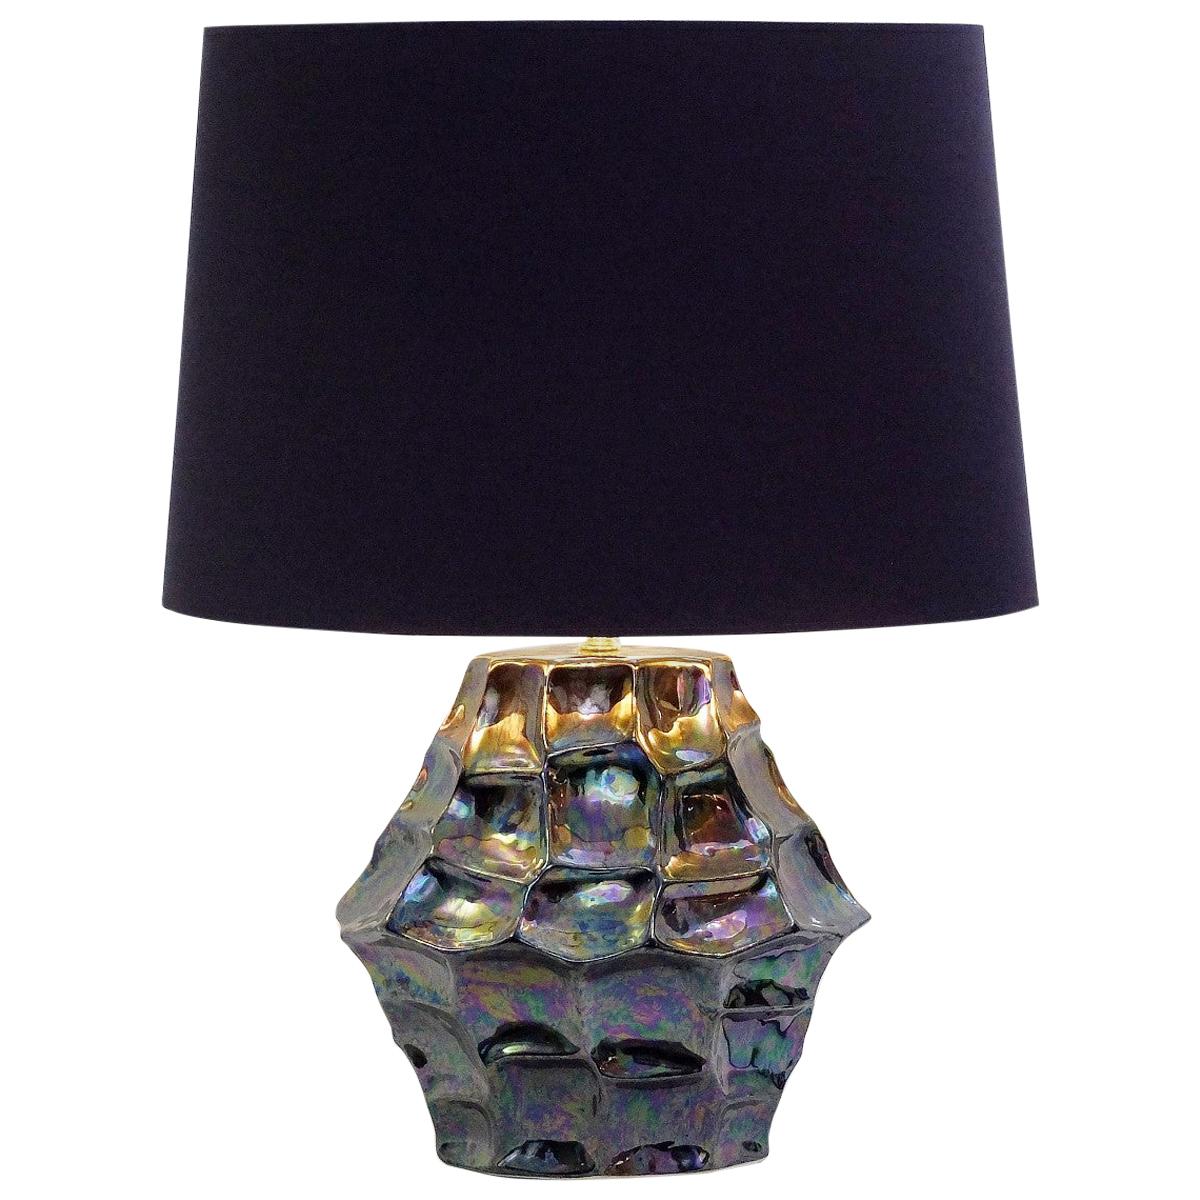 Iridescent Ceramic Table Lamp For Sale